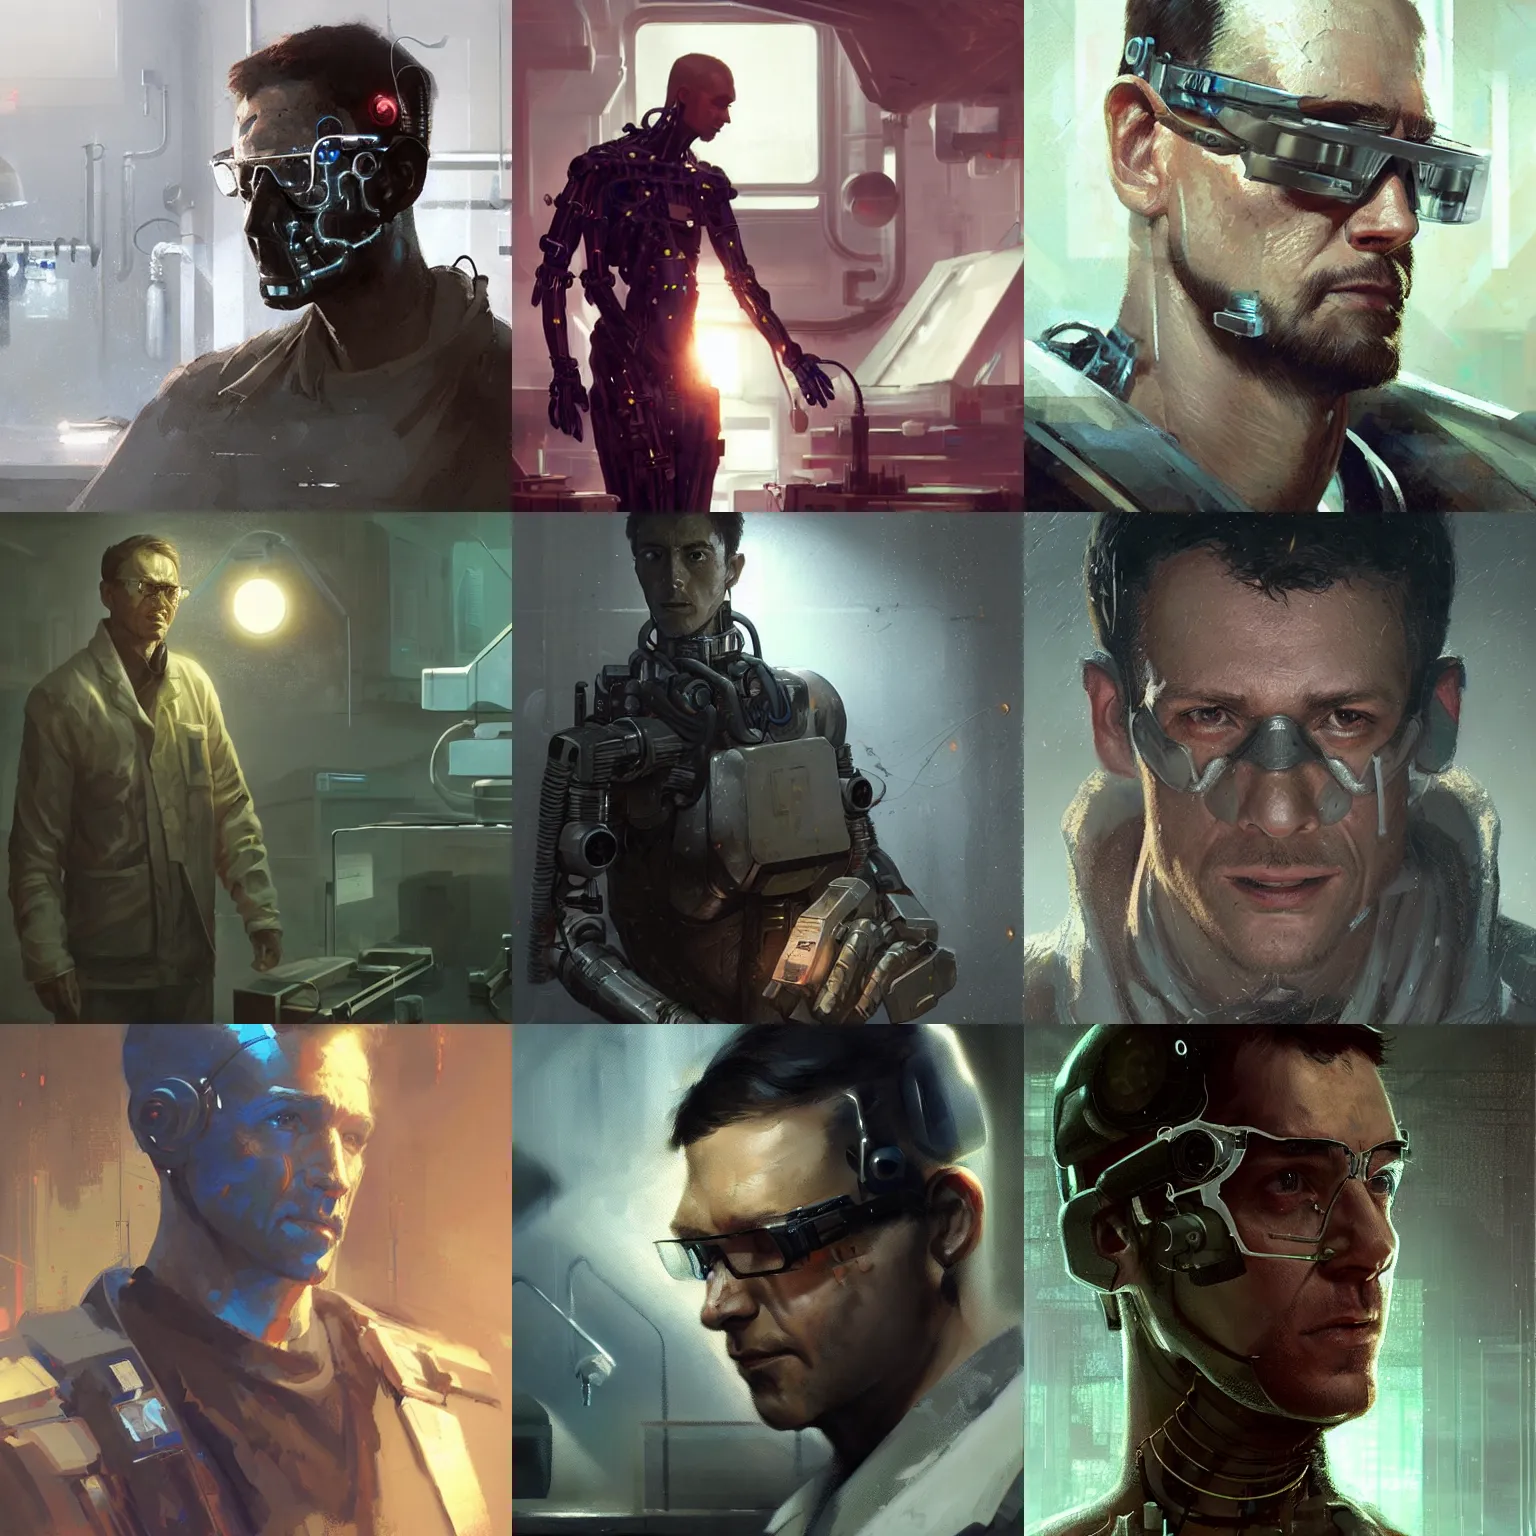 Prompt: a laboratory operator man with cybernetic enhancements, scifi character portrait by greg rutkowski, craig mullins, cinematic lighting, dystopian scifi gear